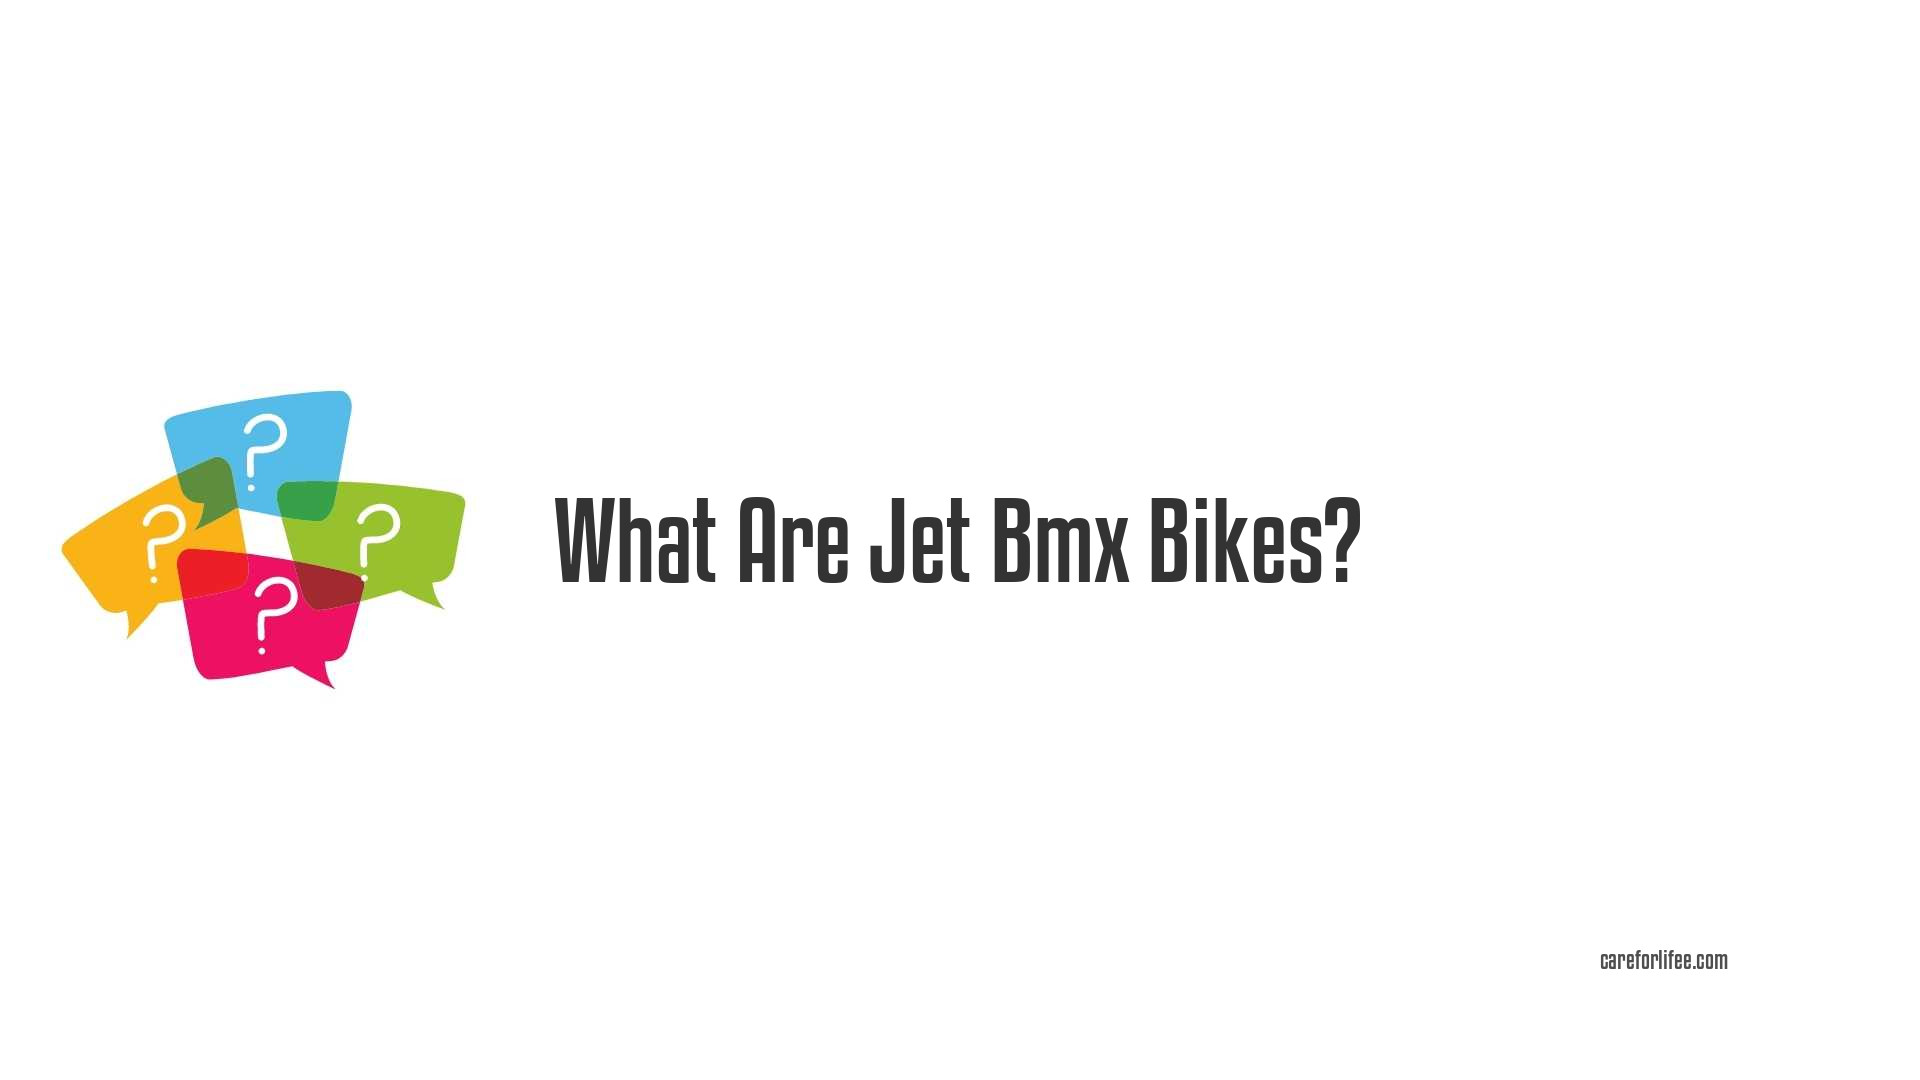 What Are Jet Bmx Bikes?